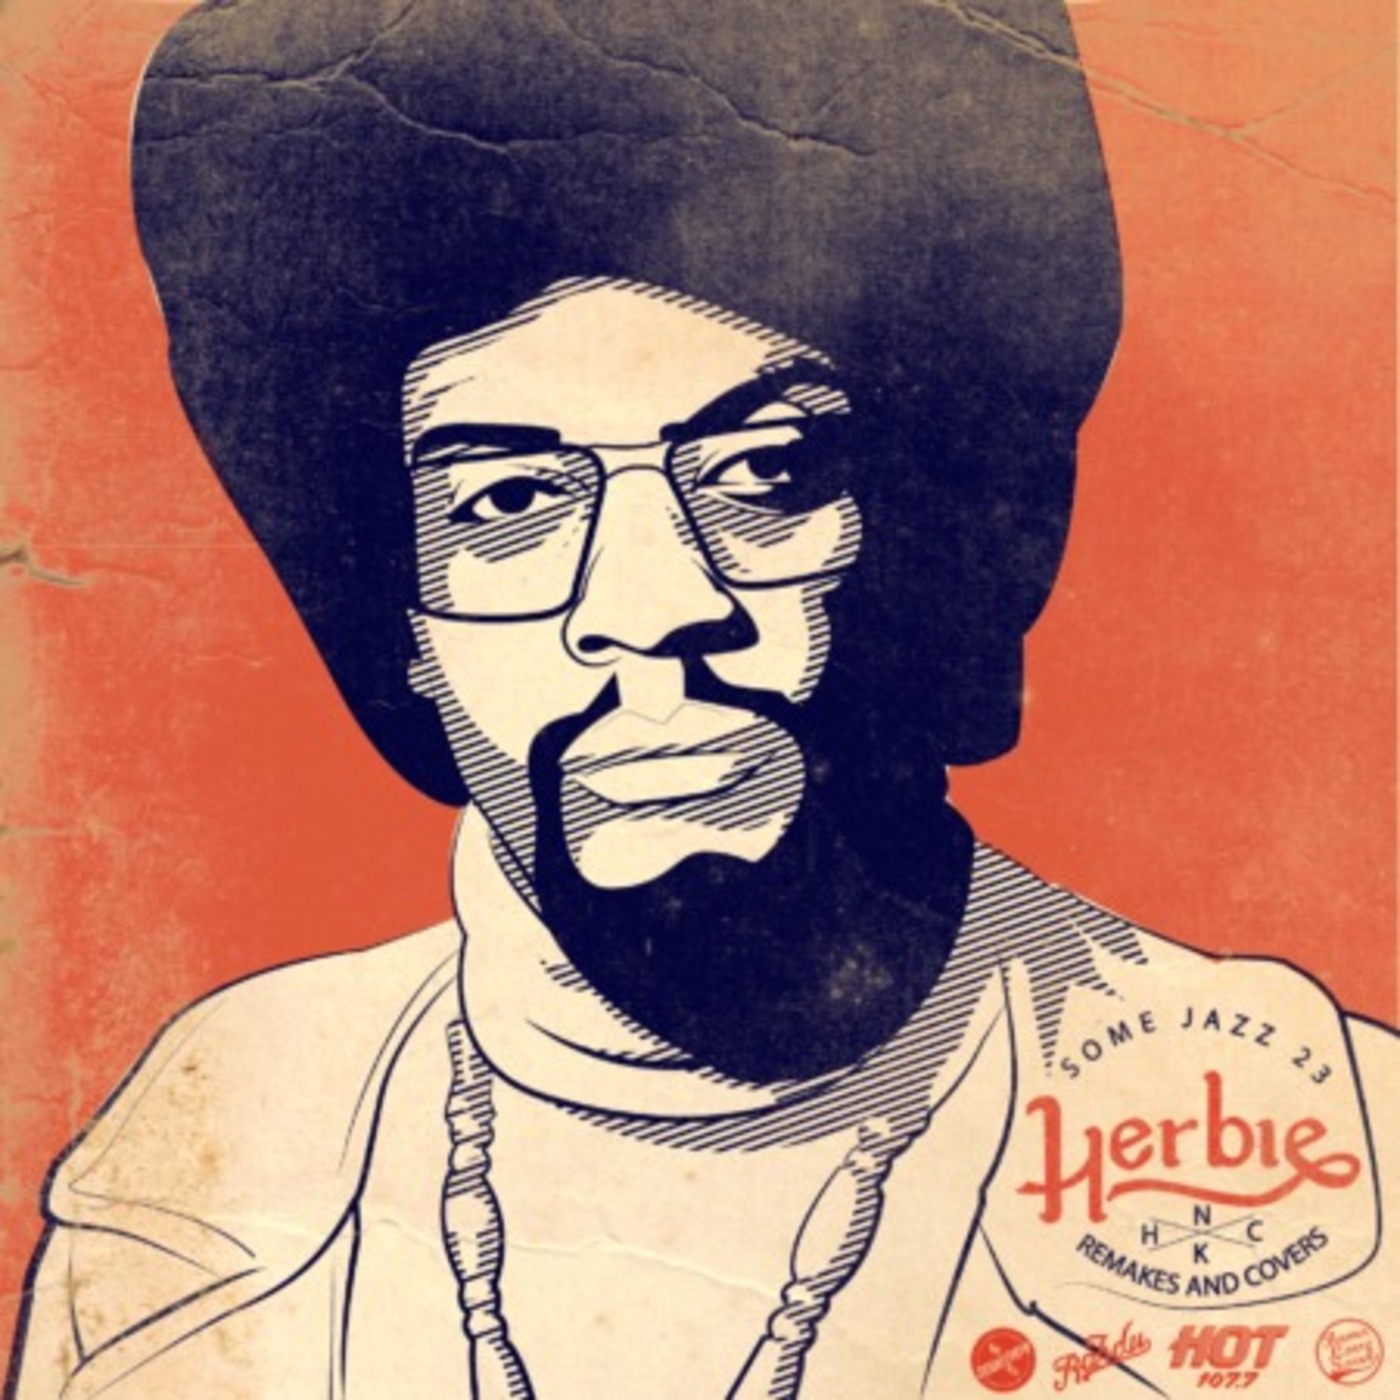 DJ Rahdu – Some Jazz 23: Herbie Hancock Remakes & Covers